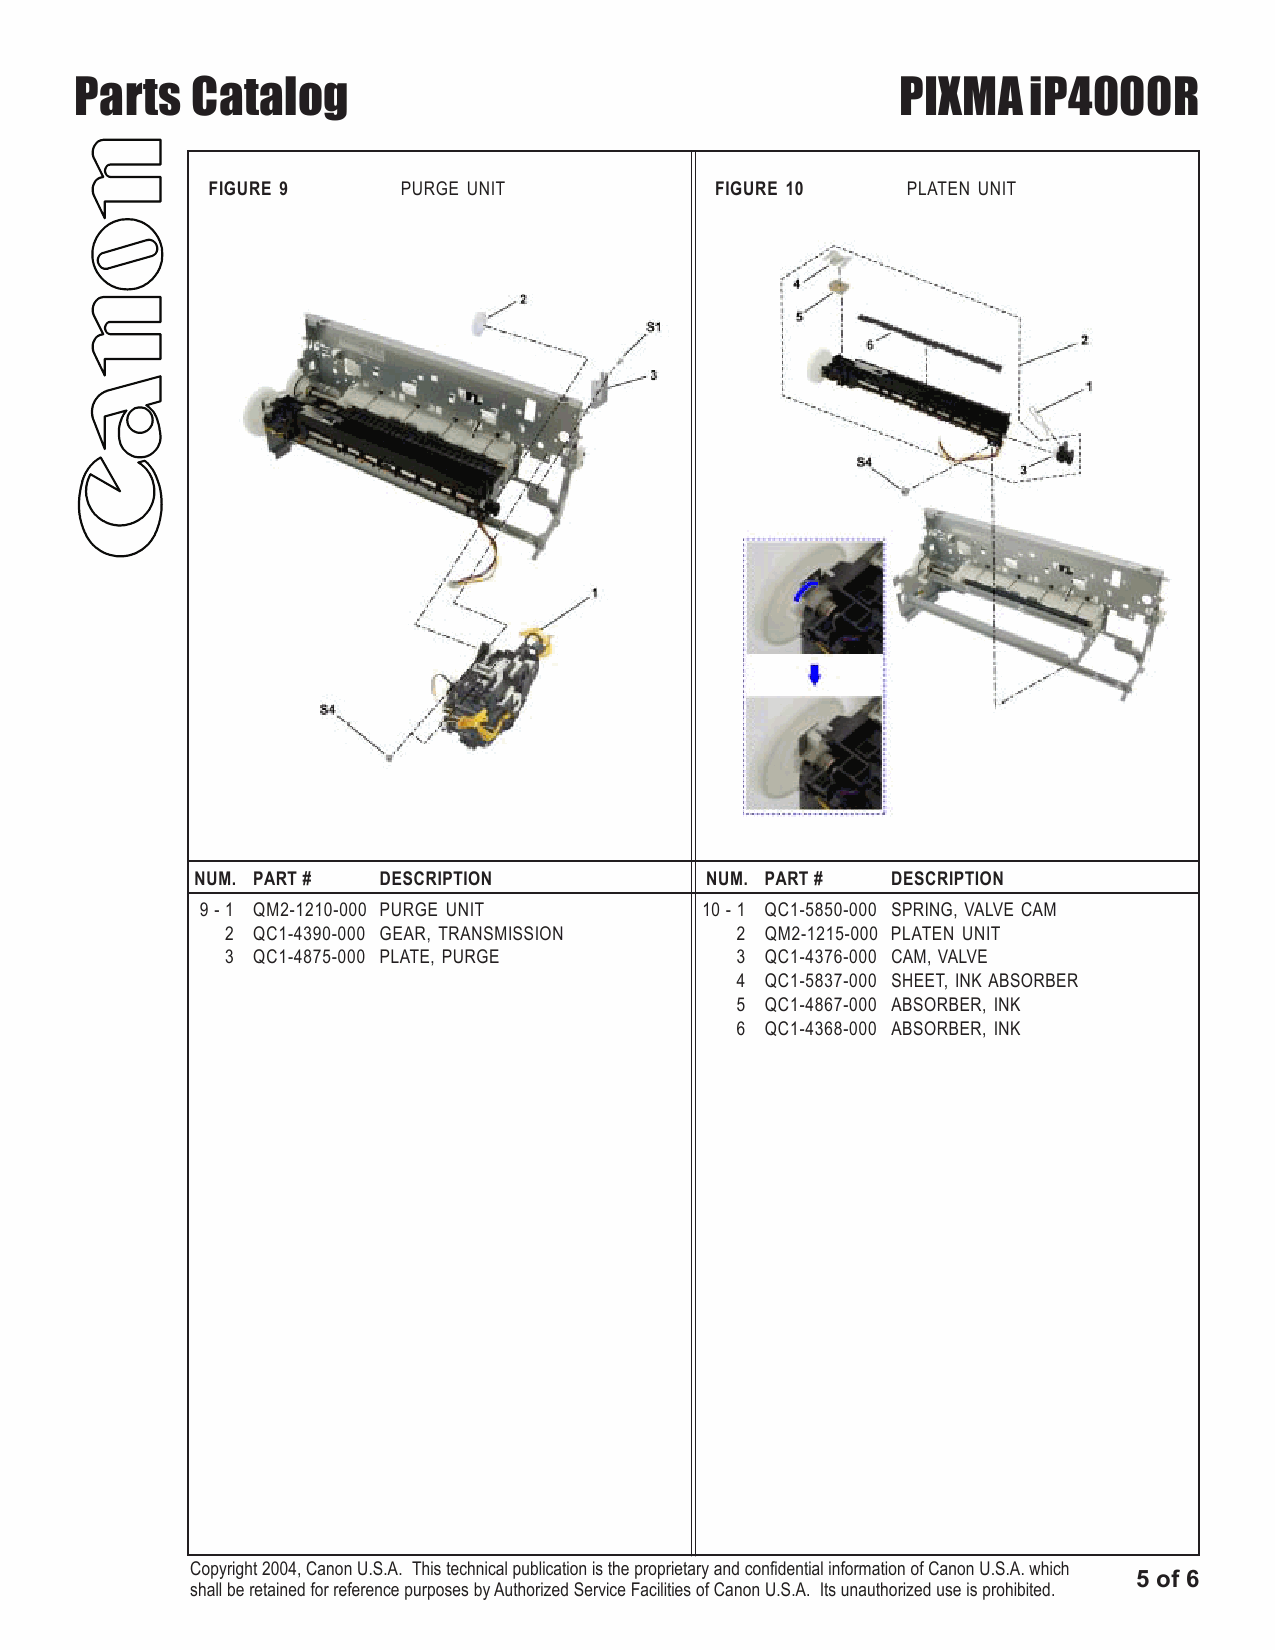 Canon PIXMA iP4000R Parts Catalog-6